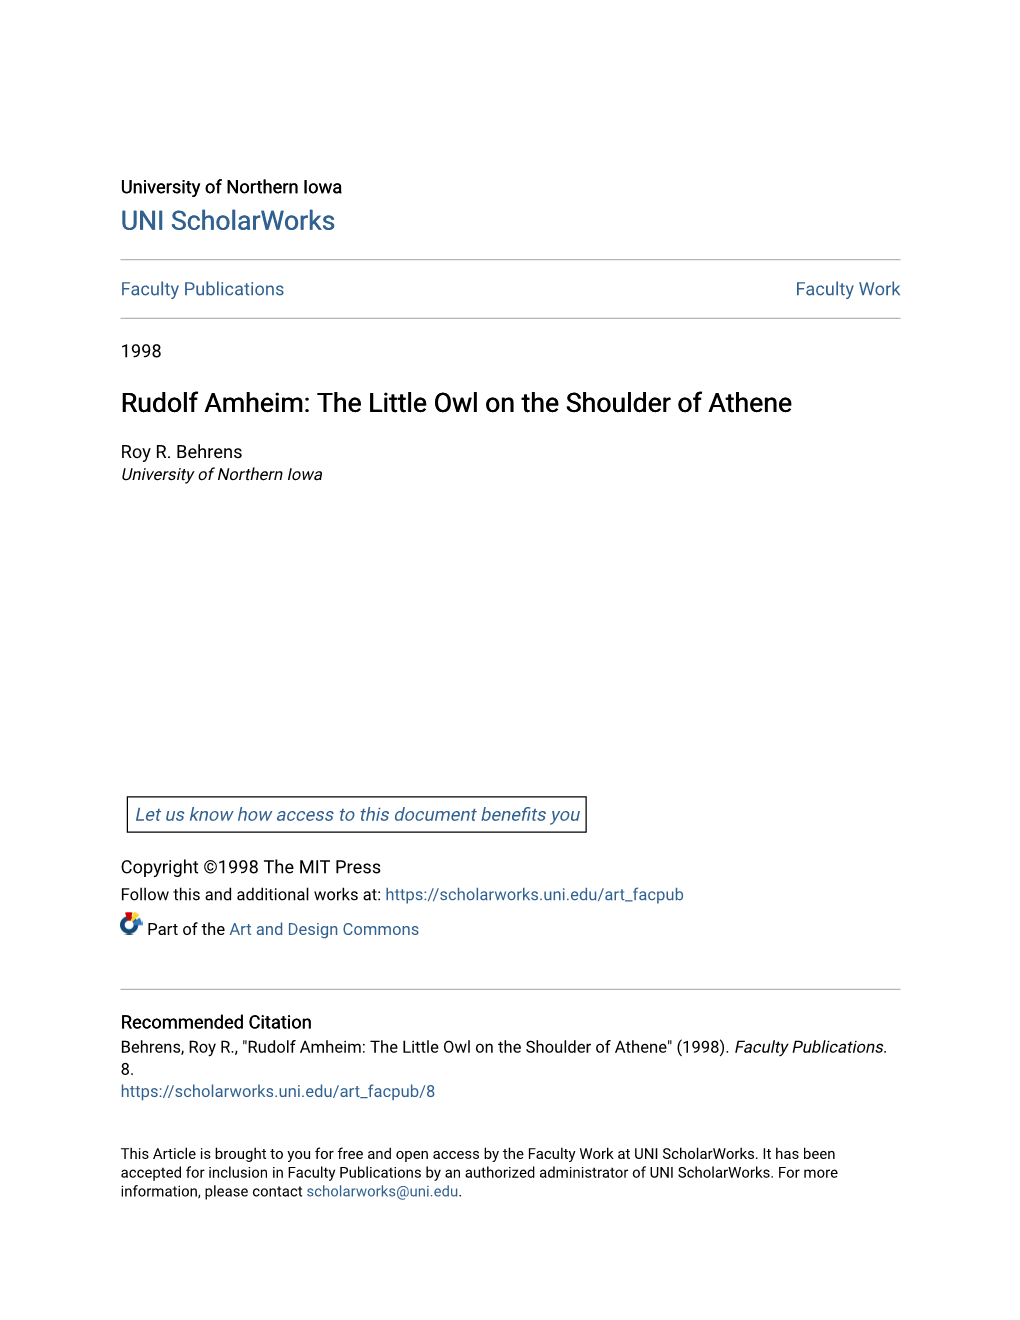 Rudolf Amheim: the Little Owl on the Shoulder of Athene